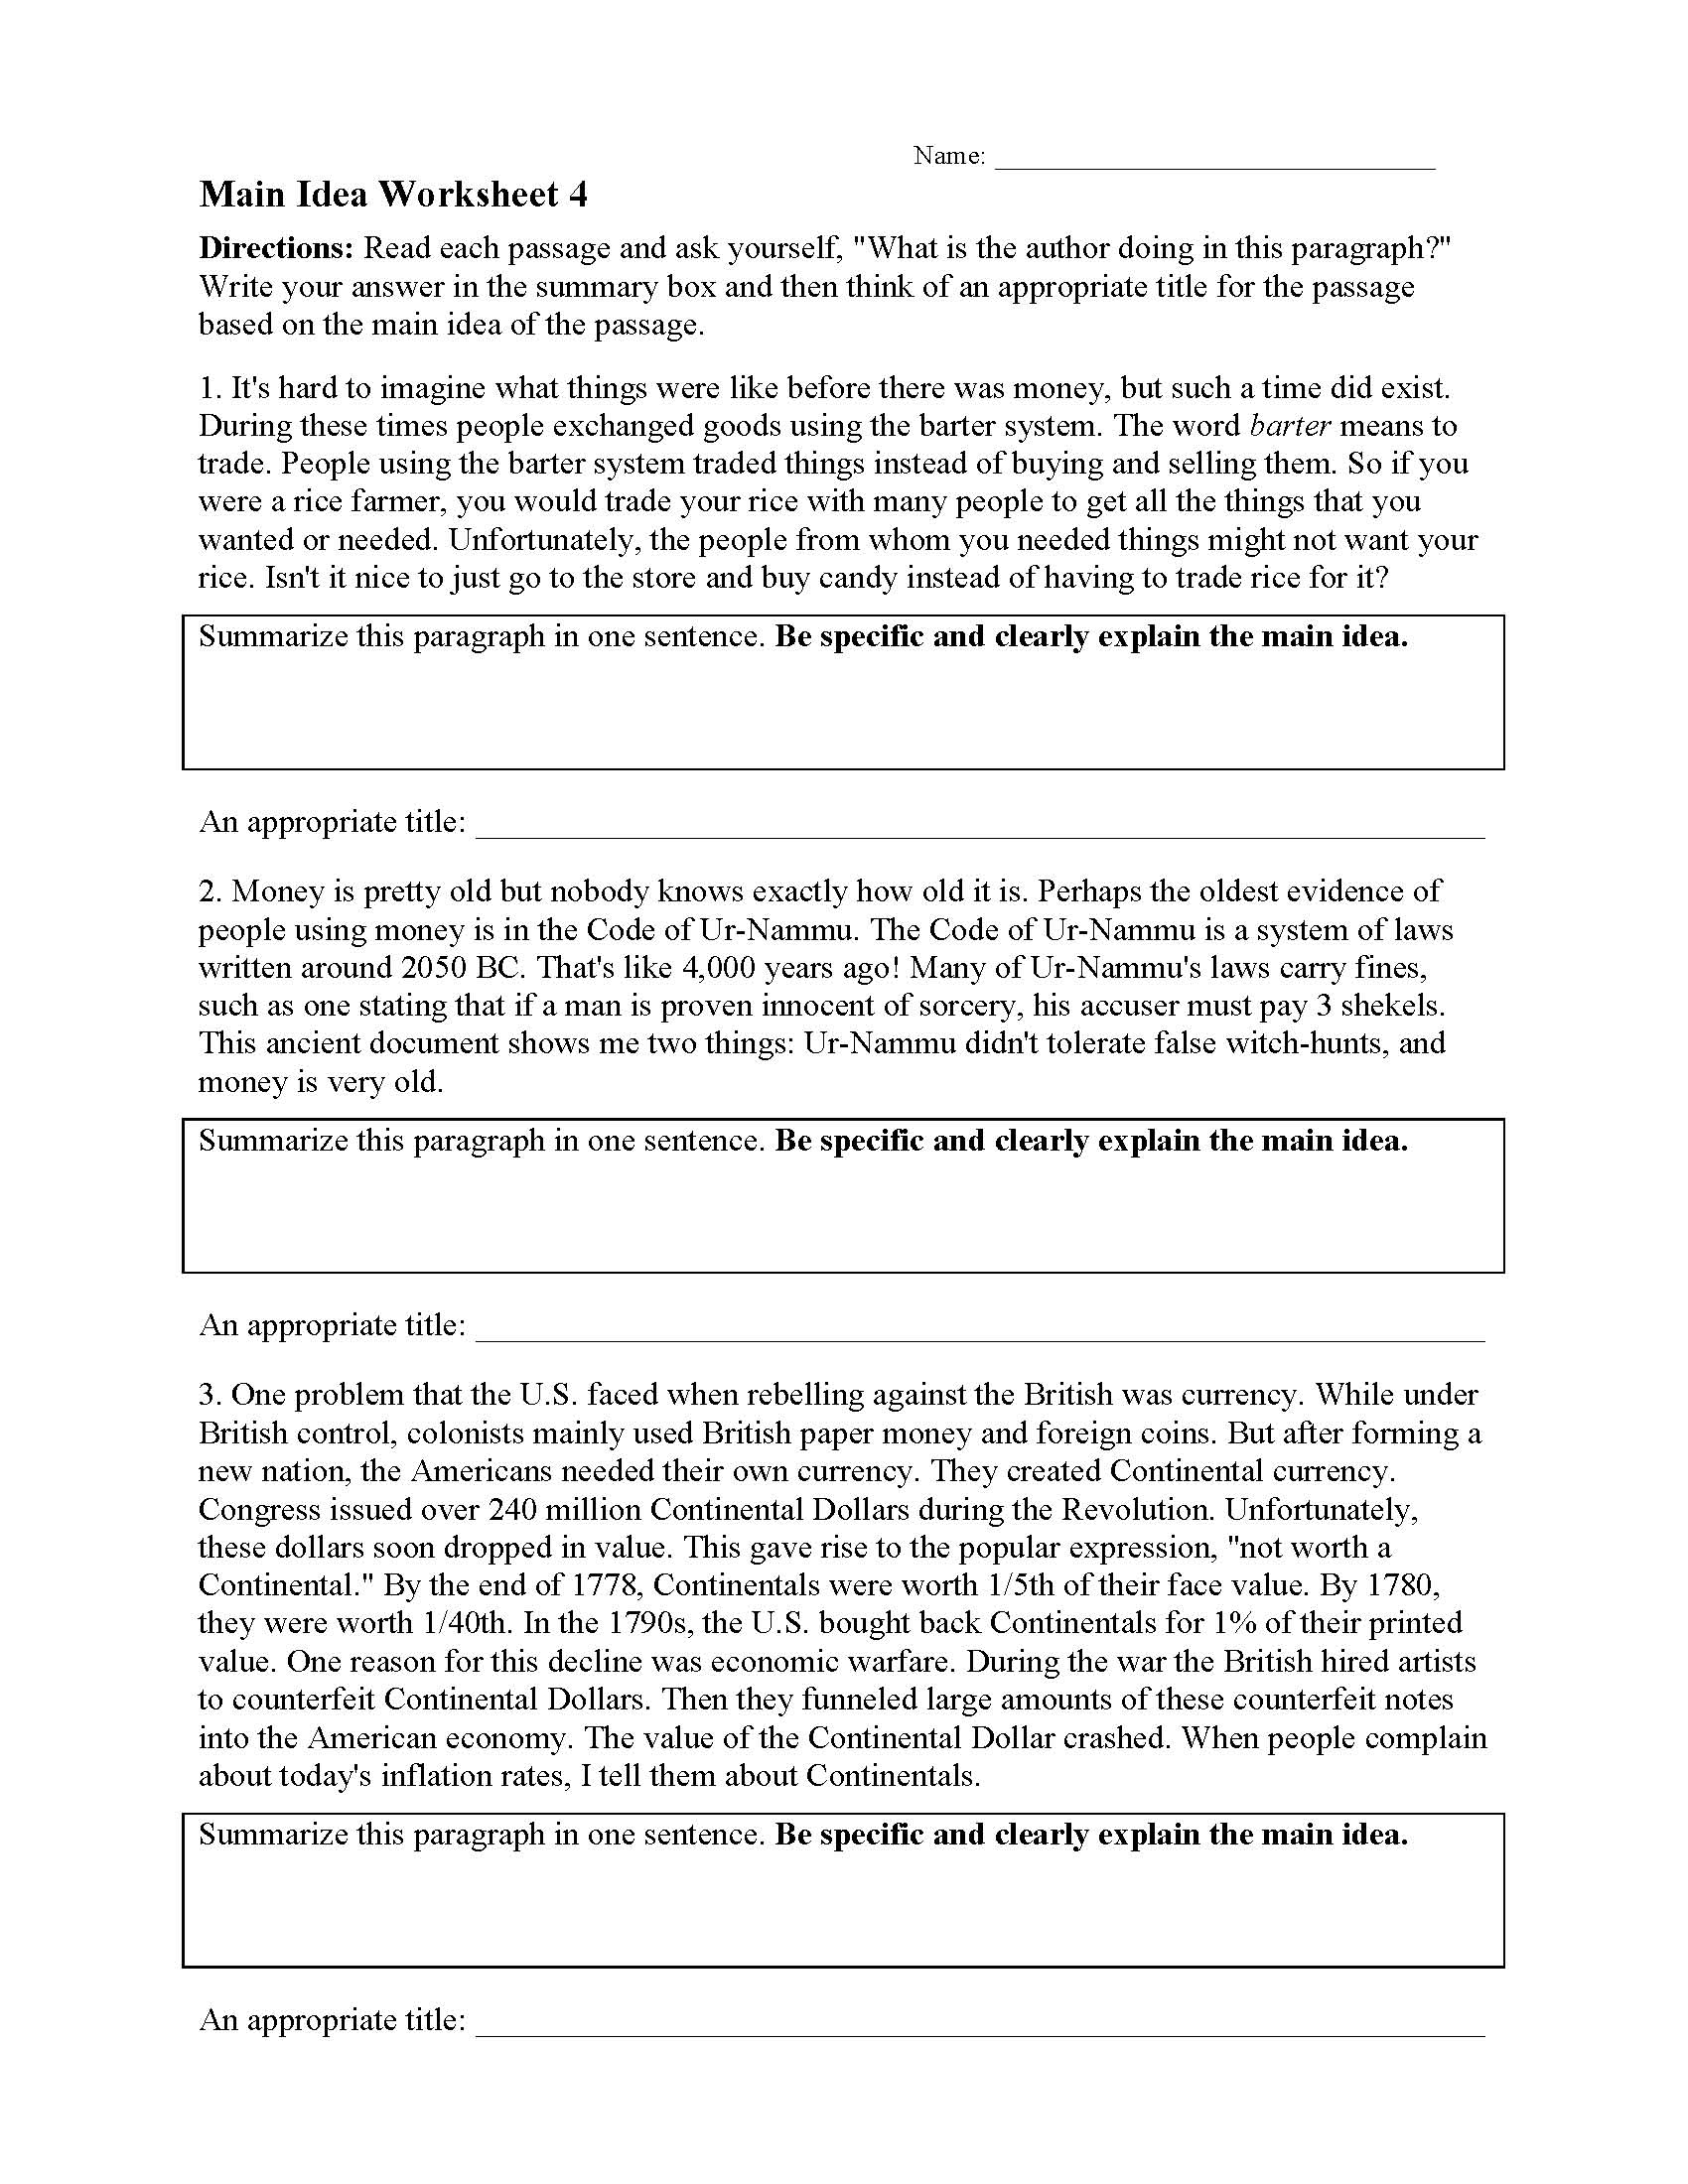 Main Idea Worksheets  Ereading Worksheets With Regard To Main Idea Worksheet 4th Grade